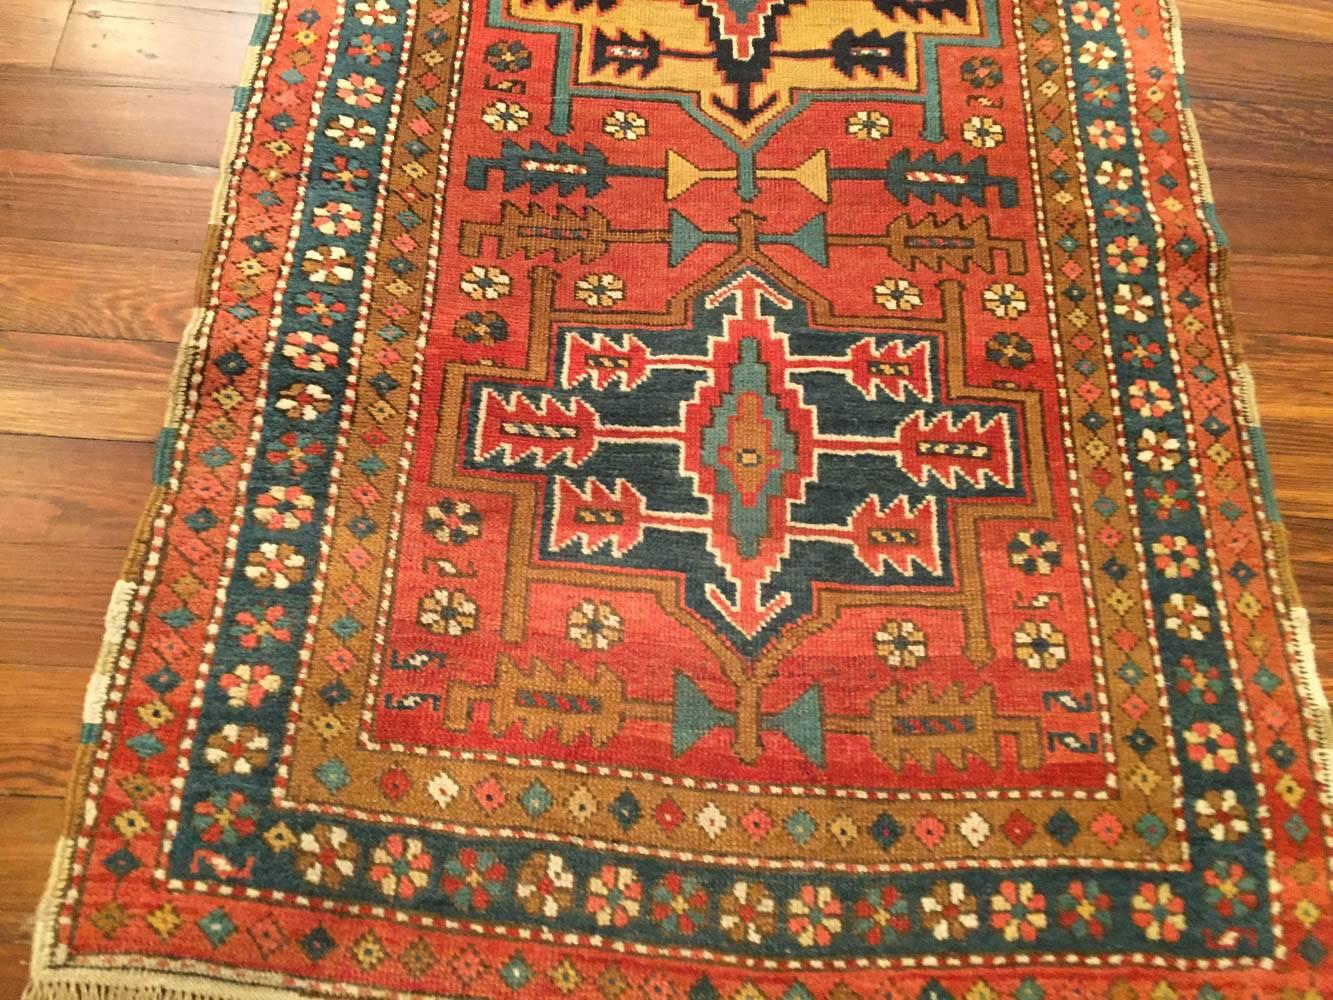 An antique Persian Northwest Persia runner rug, circa 1910.